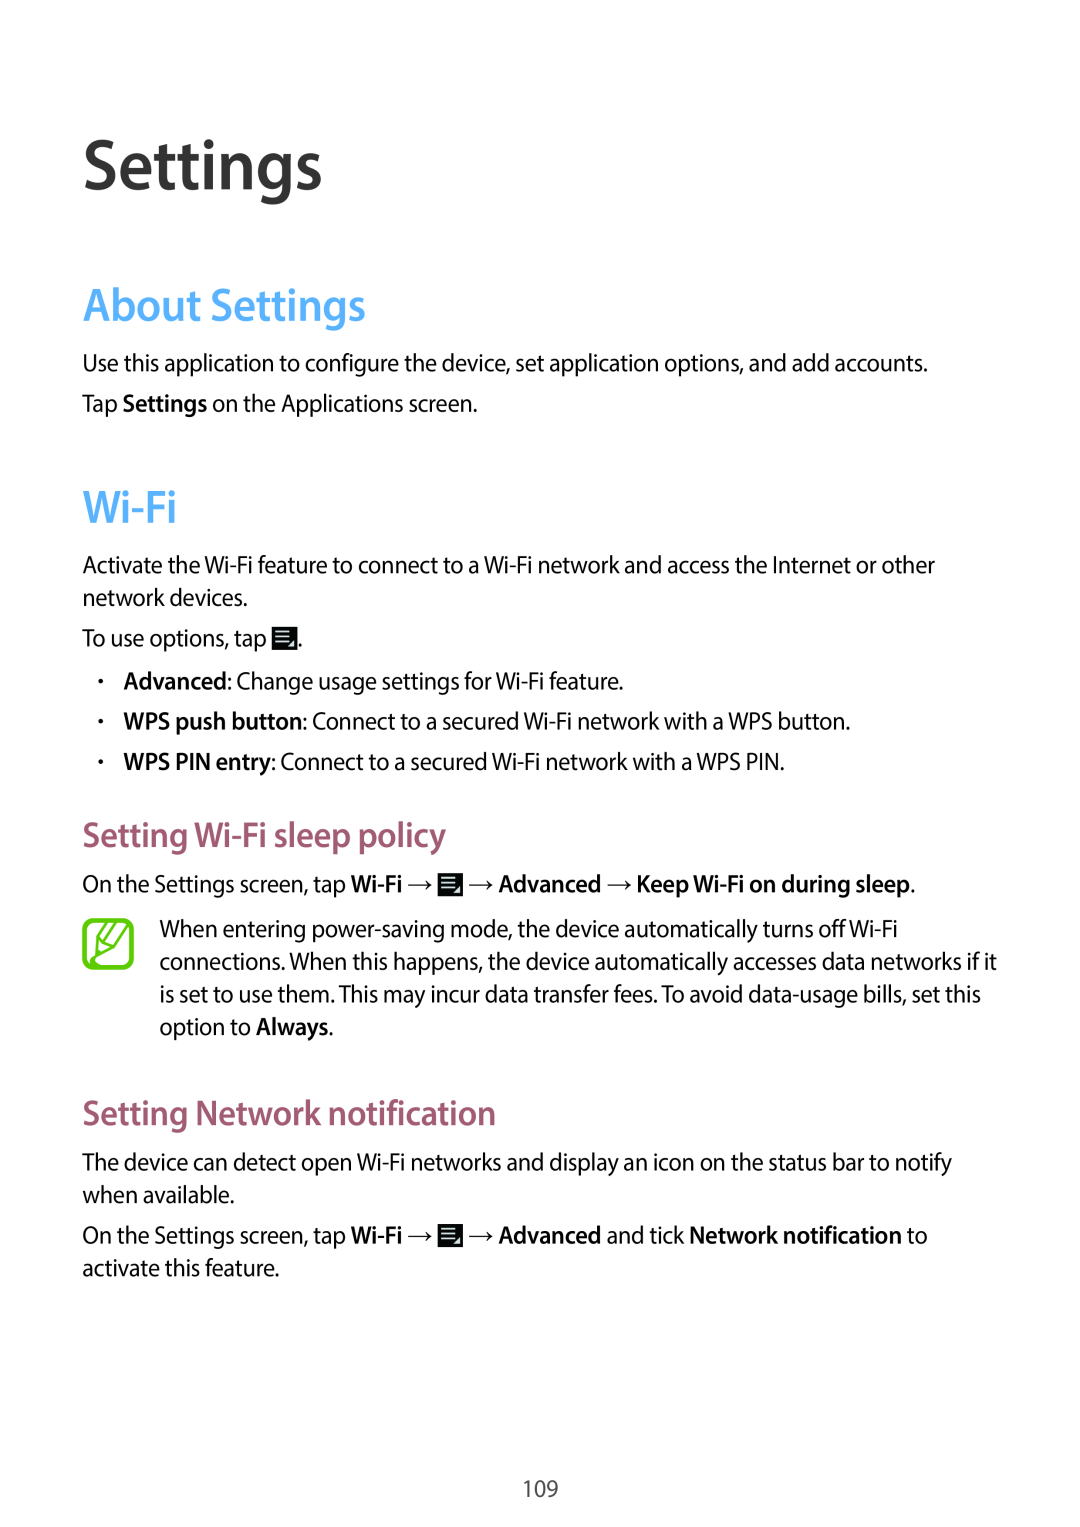 Samsung EK-GC100 user manual About Settings, Setting Wi-Fi sleep policy, Setting Network notification 